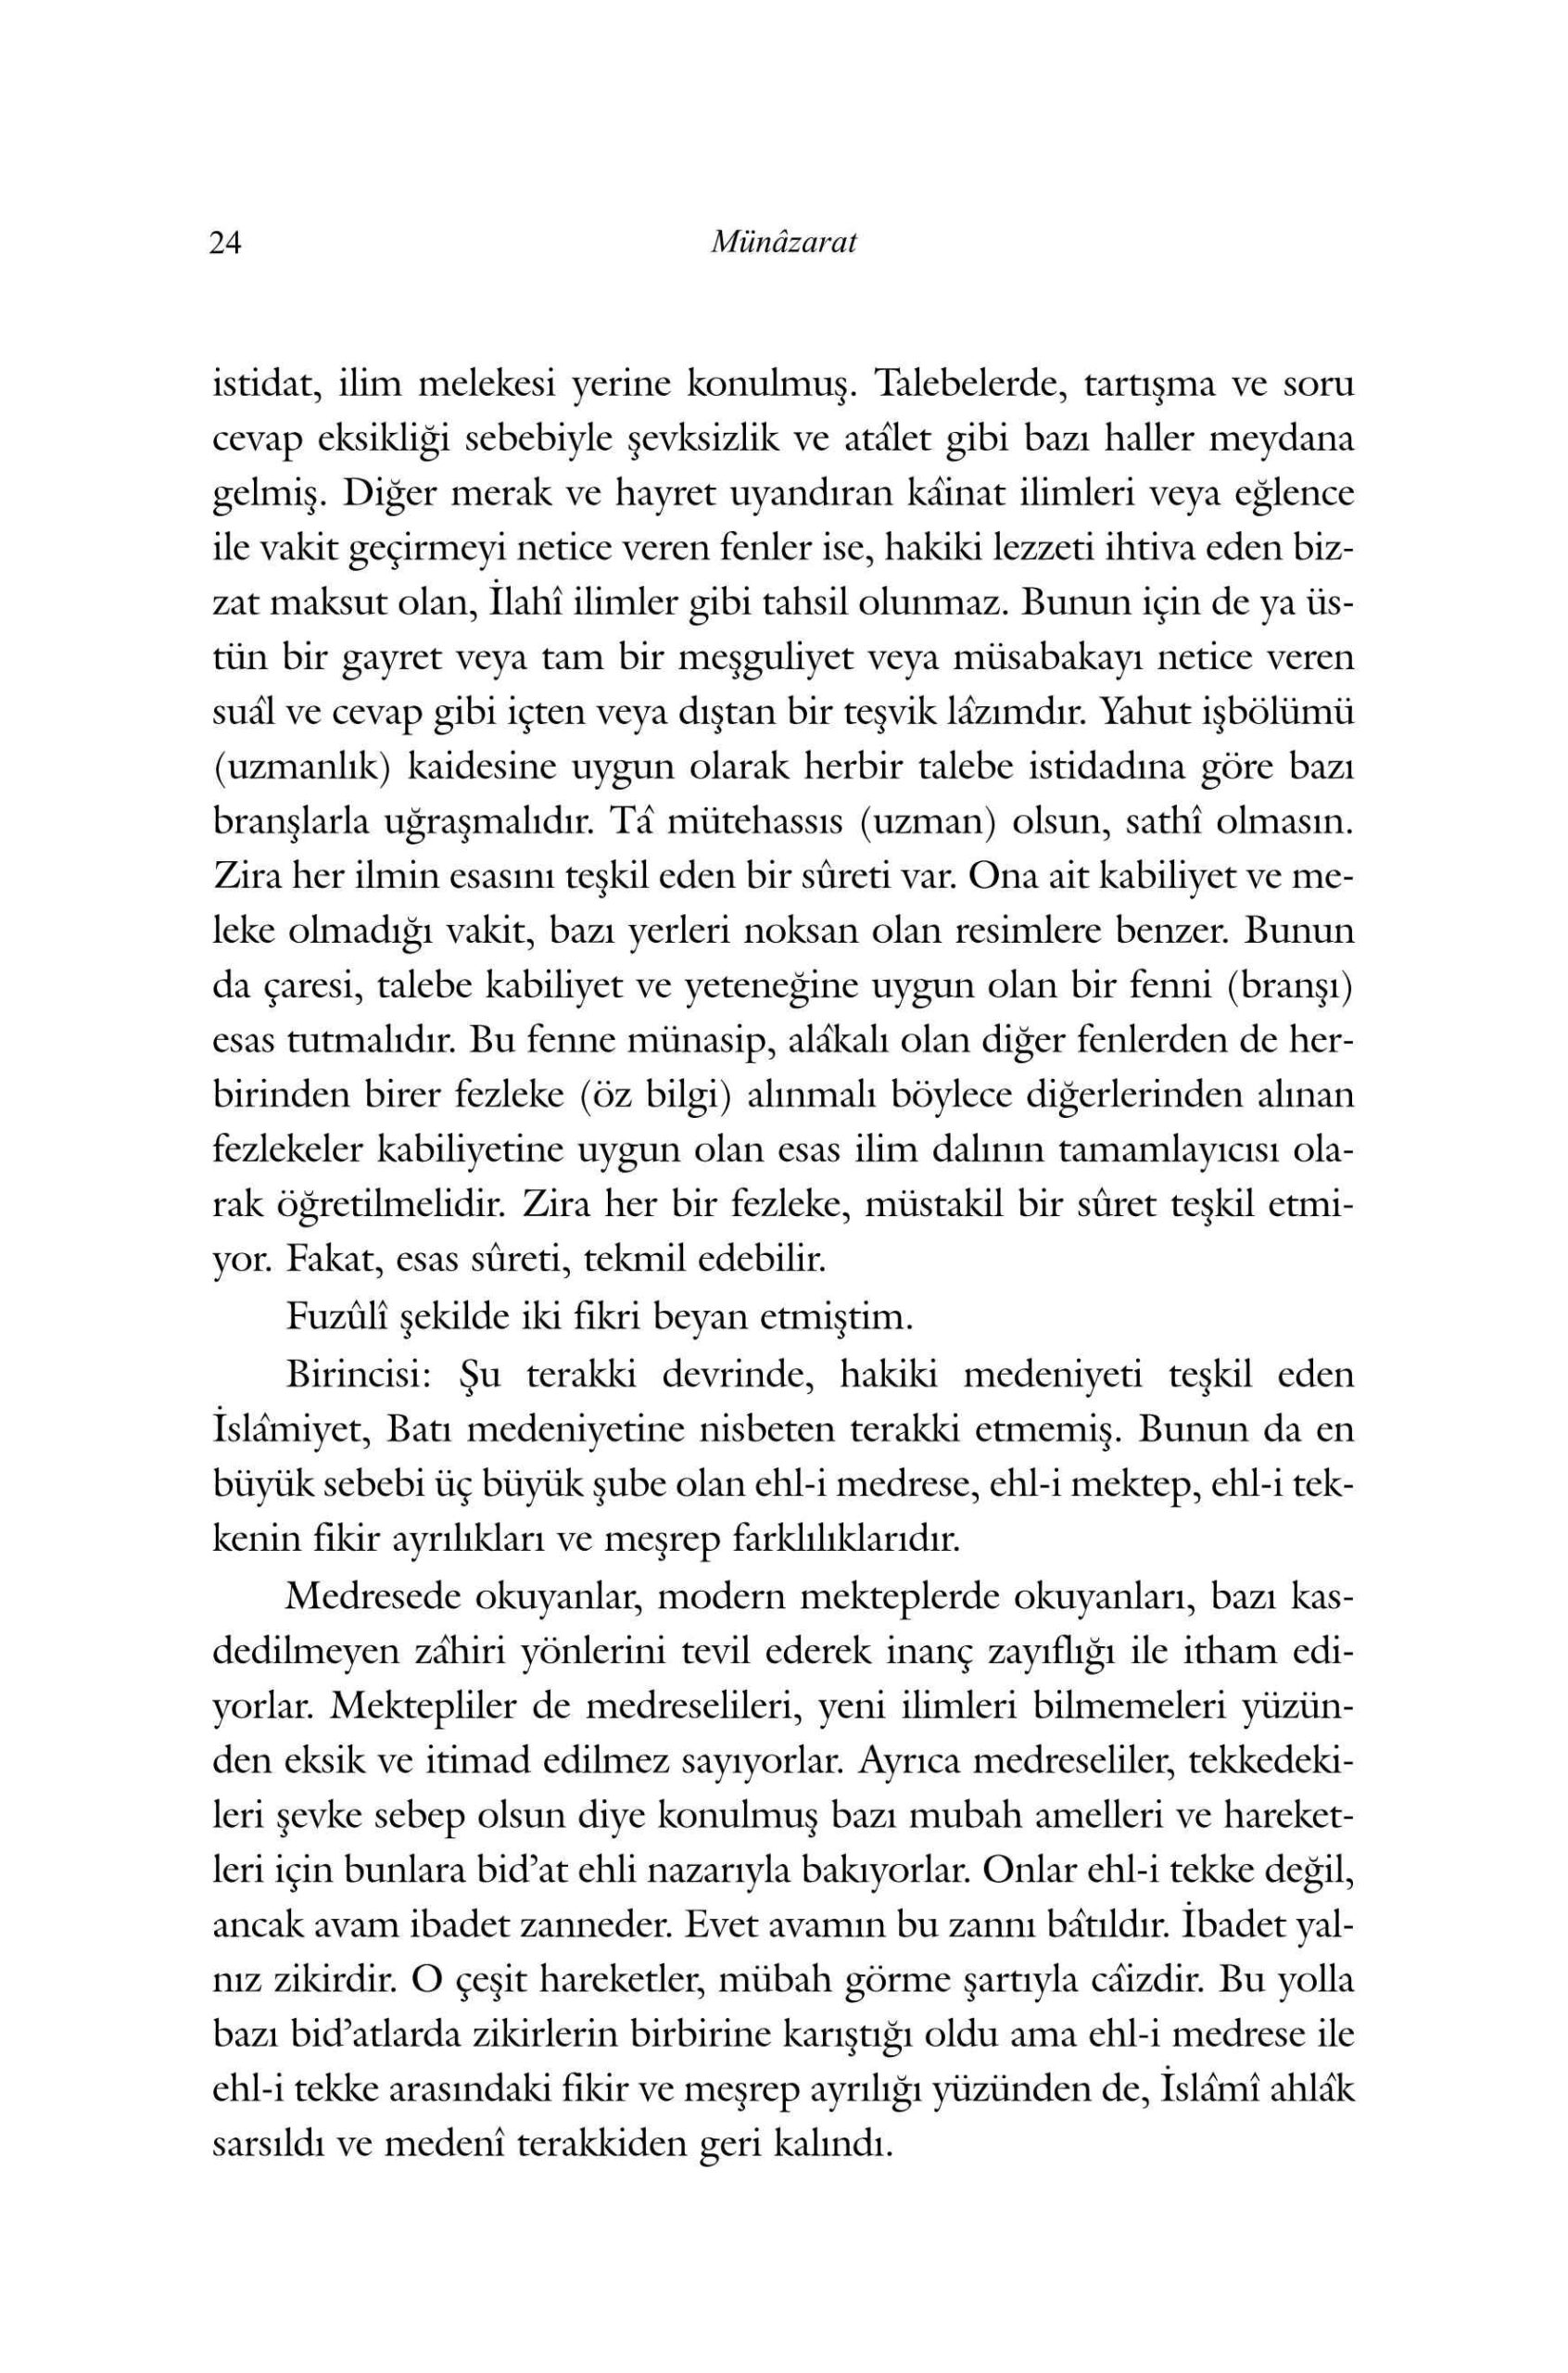 B Said Nursi - Abdullah Aymaz - Münazarat Uzerine - SahdamarY.pdf, 142-Sayfa 